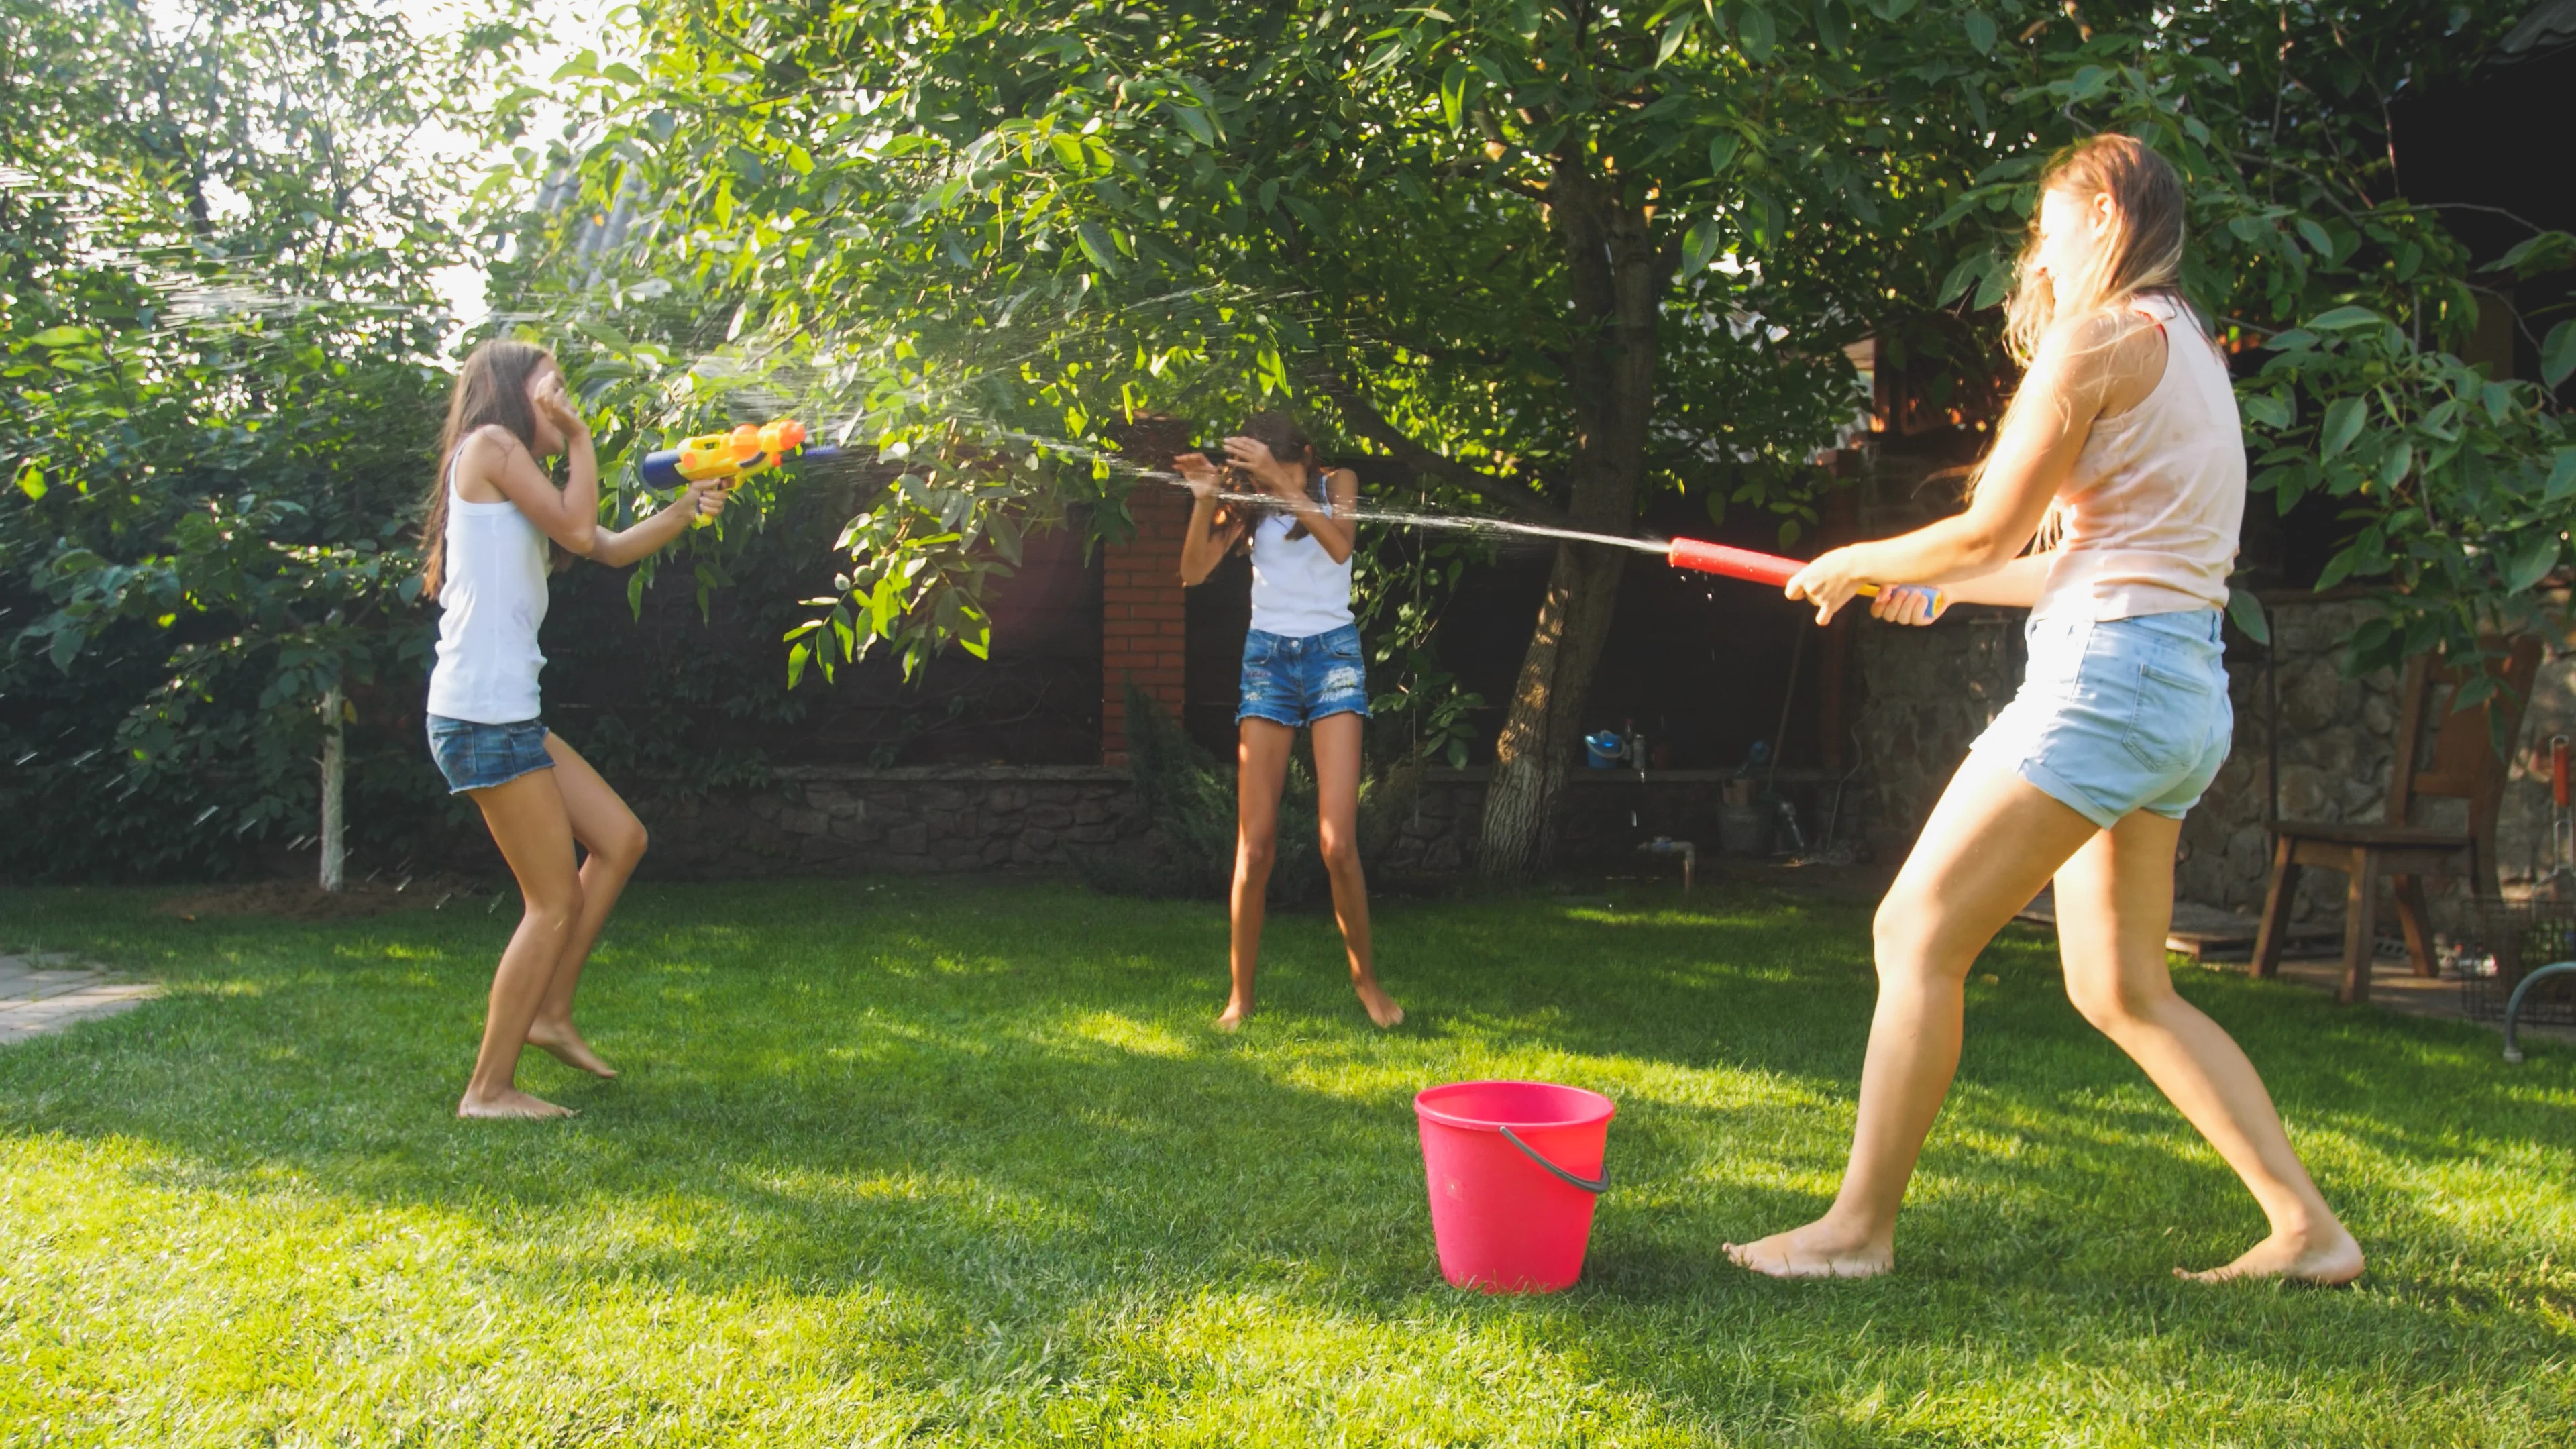 Girls playing with garden sprinkler